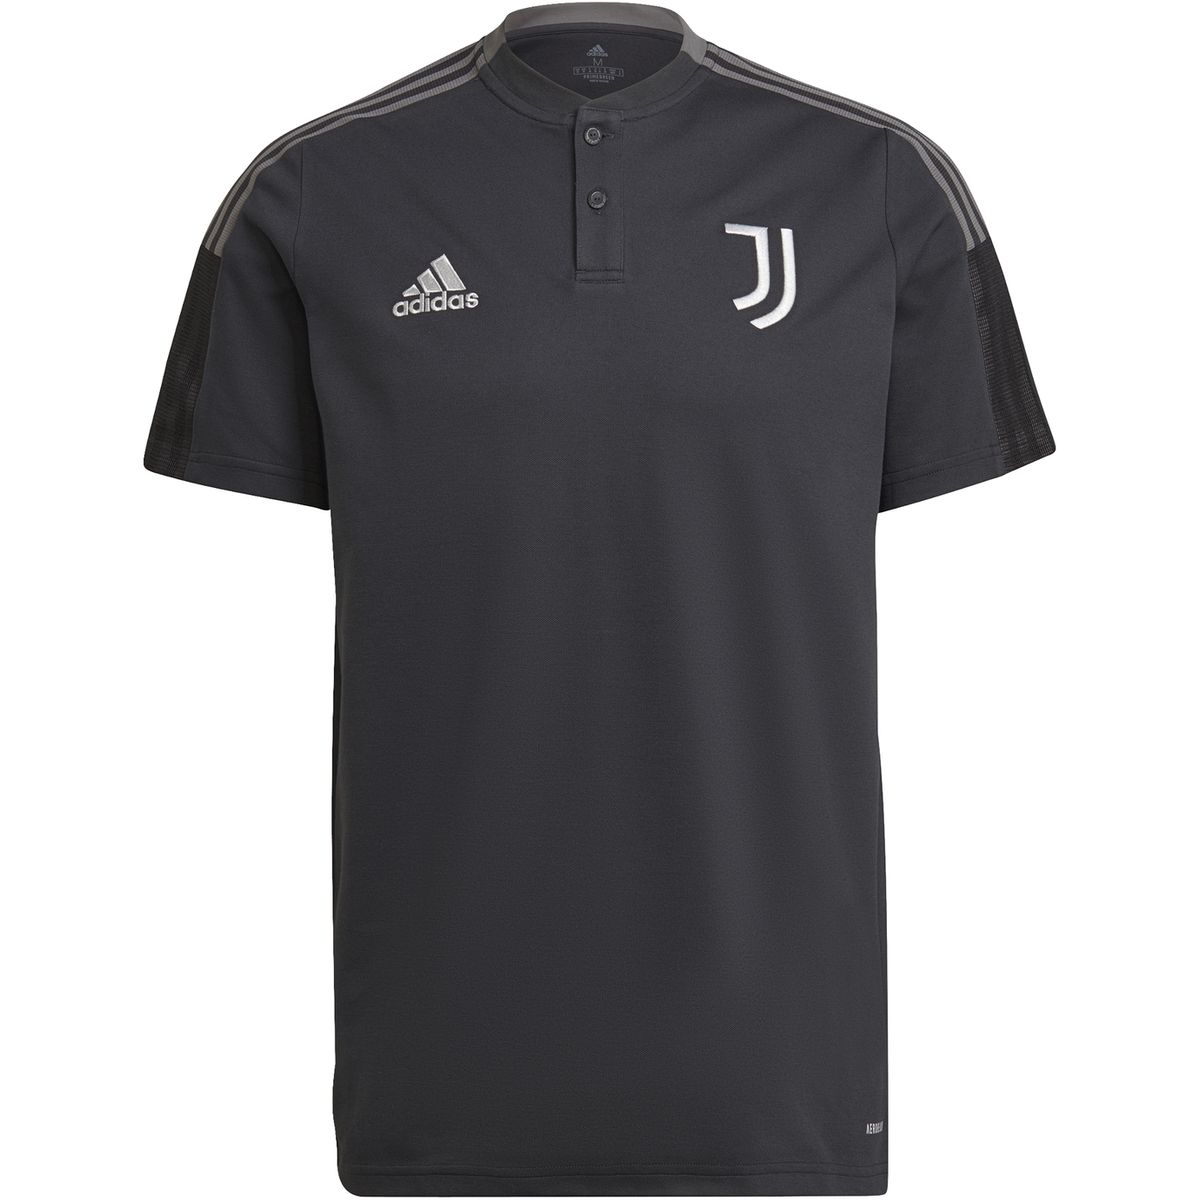 Adidas Juventus Turin Tiro Poloshirt Herren